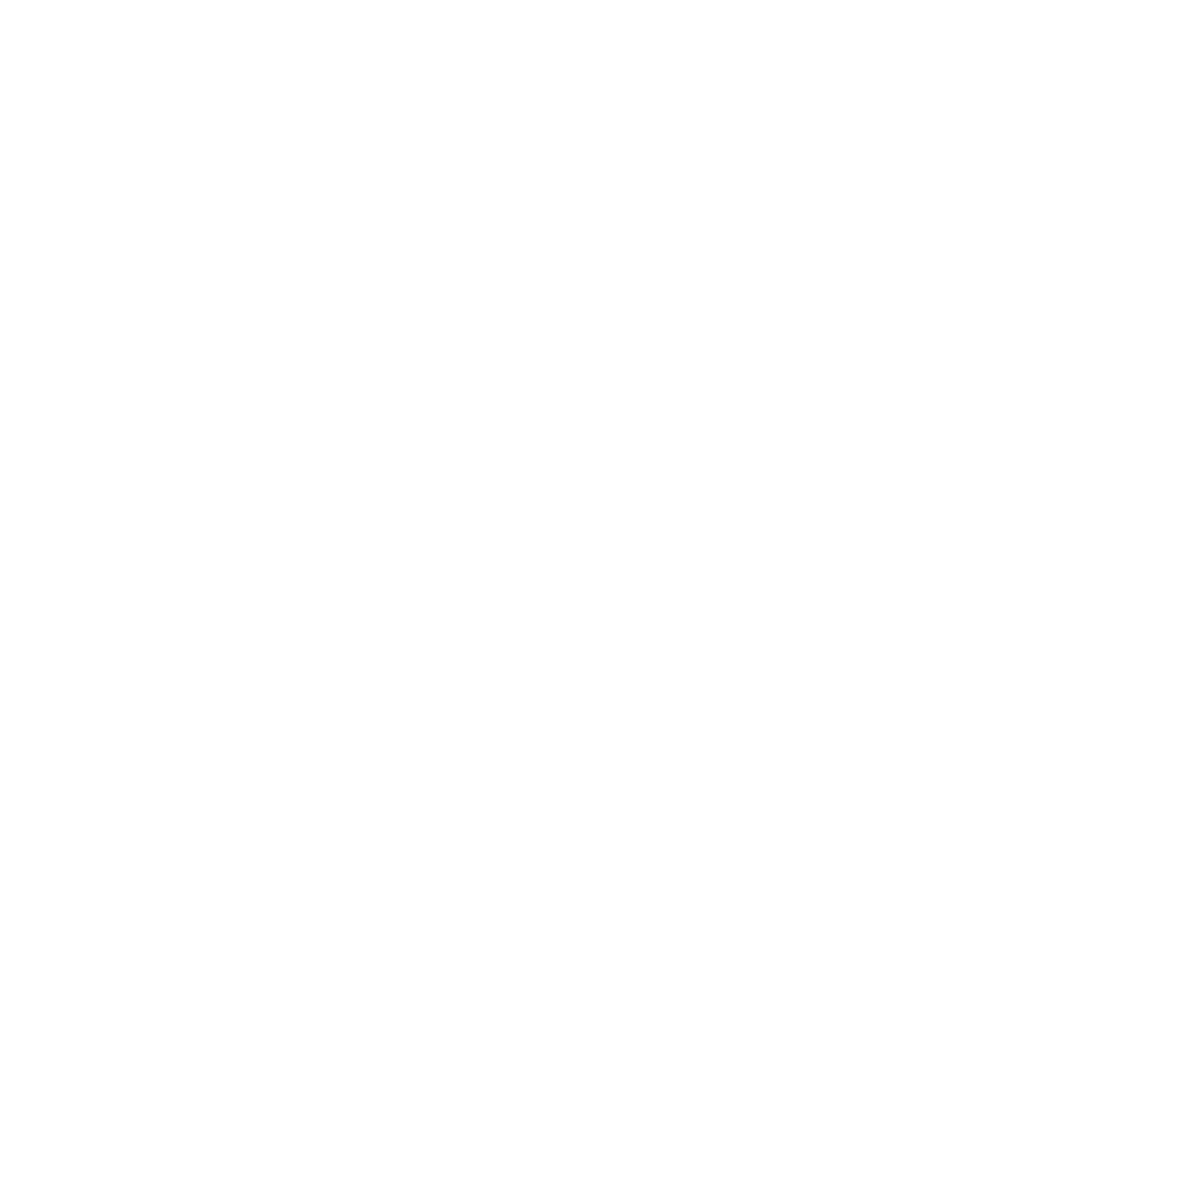 Harvest & Blooms